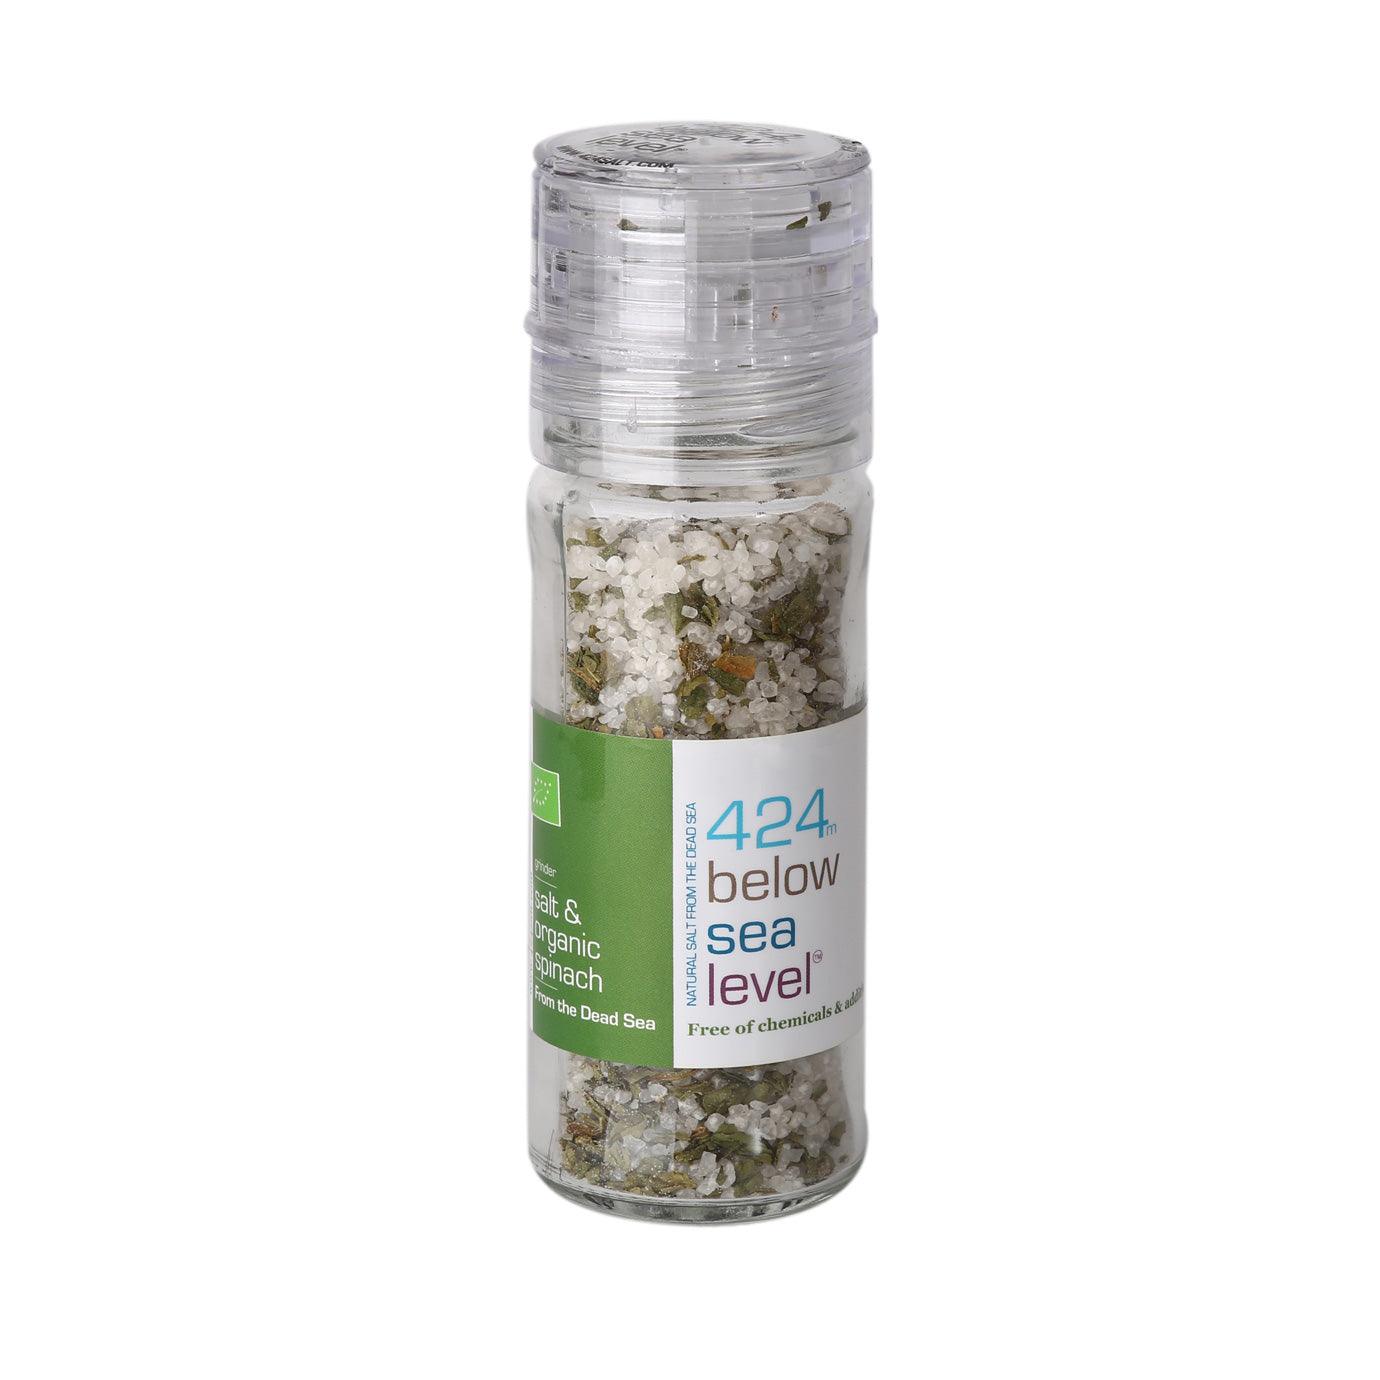 Salt & Organic Spinach From The Dead Sea 3.87oz / 110 grams - Spring Nahal